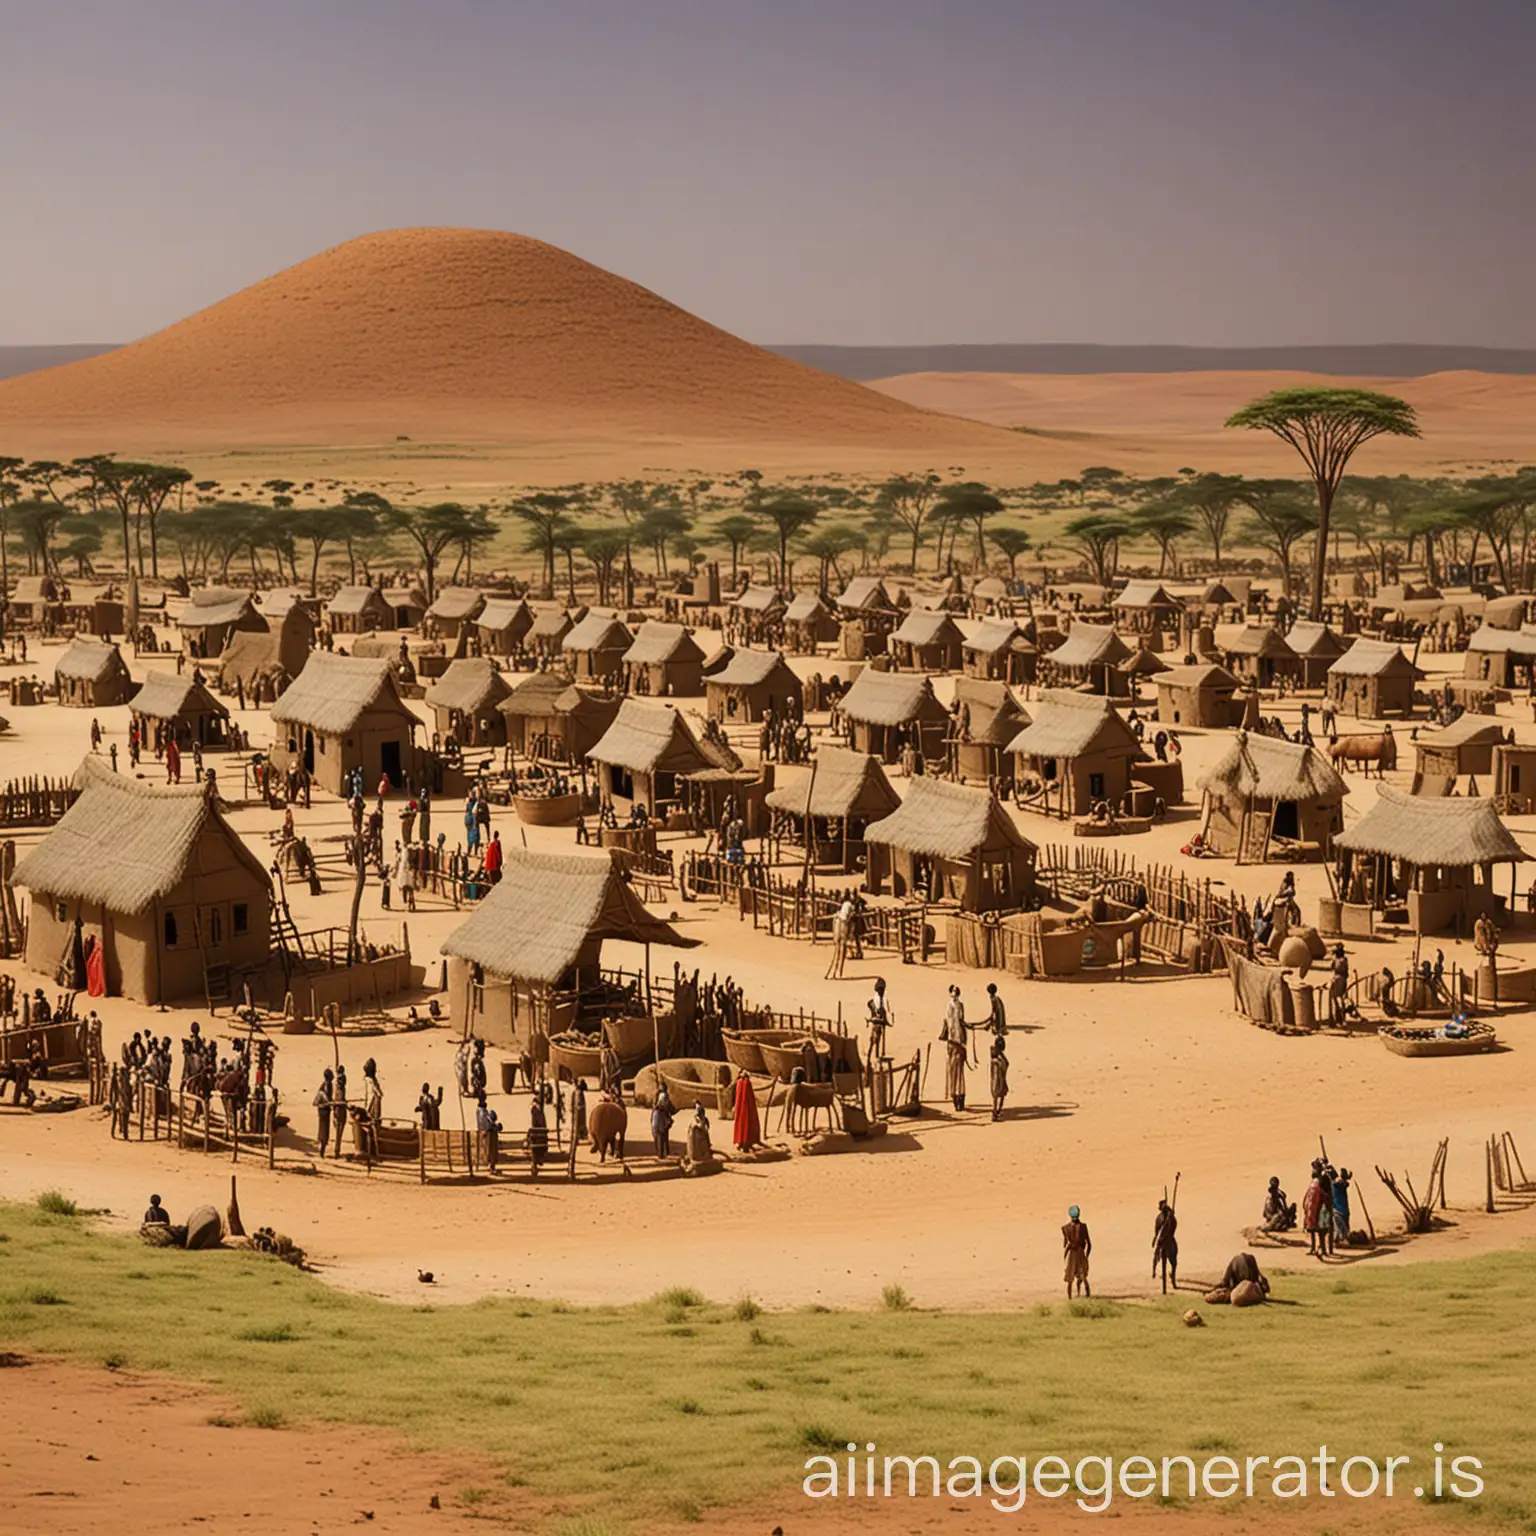 african village town set up